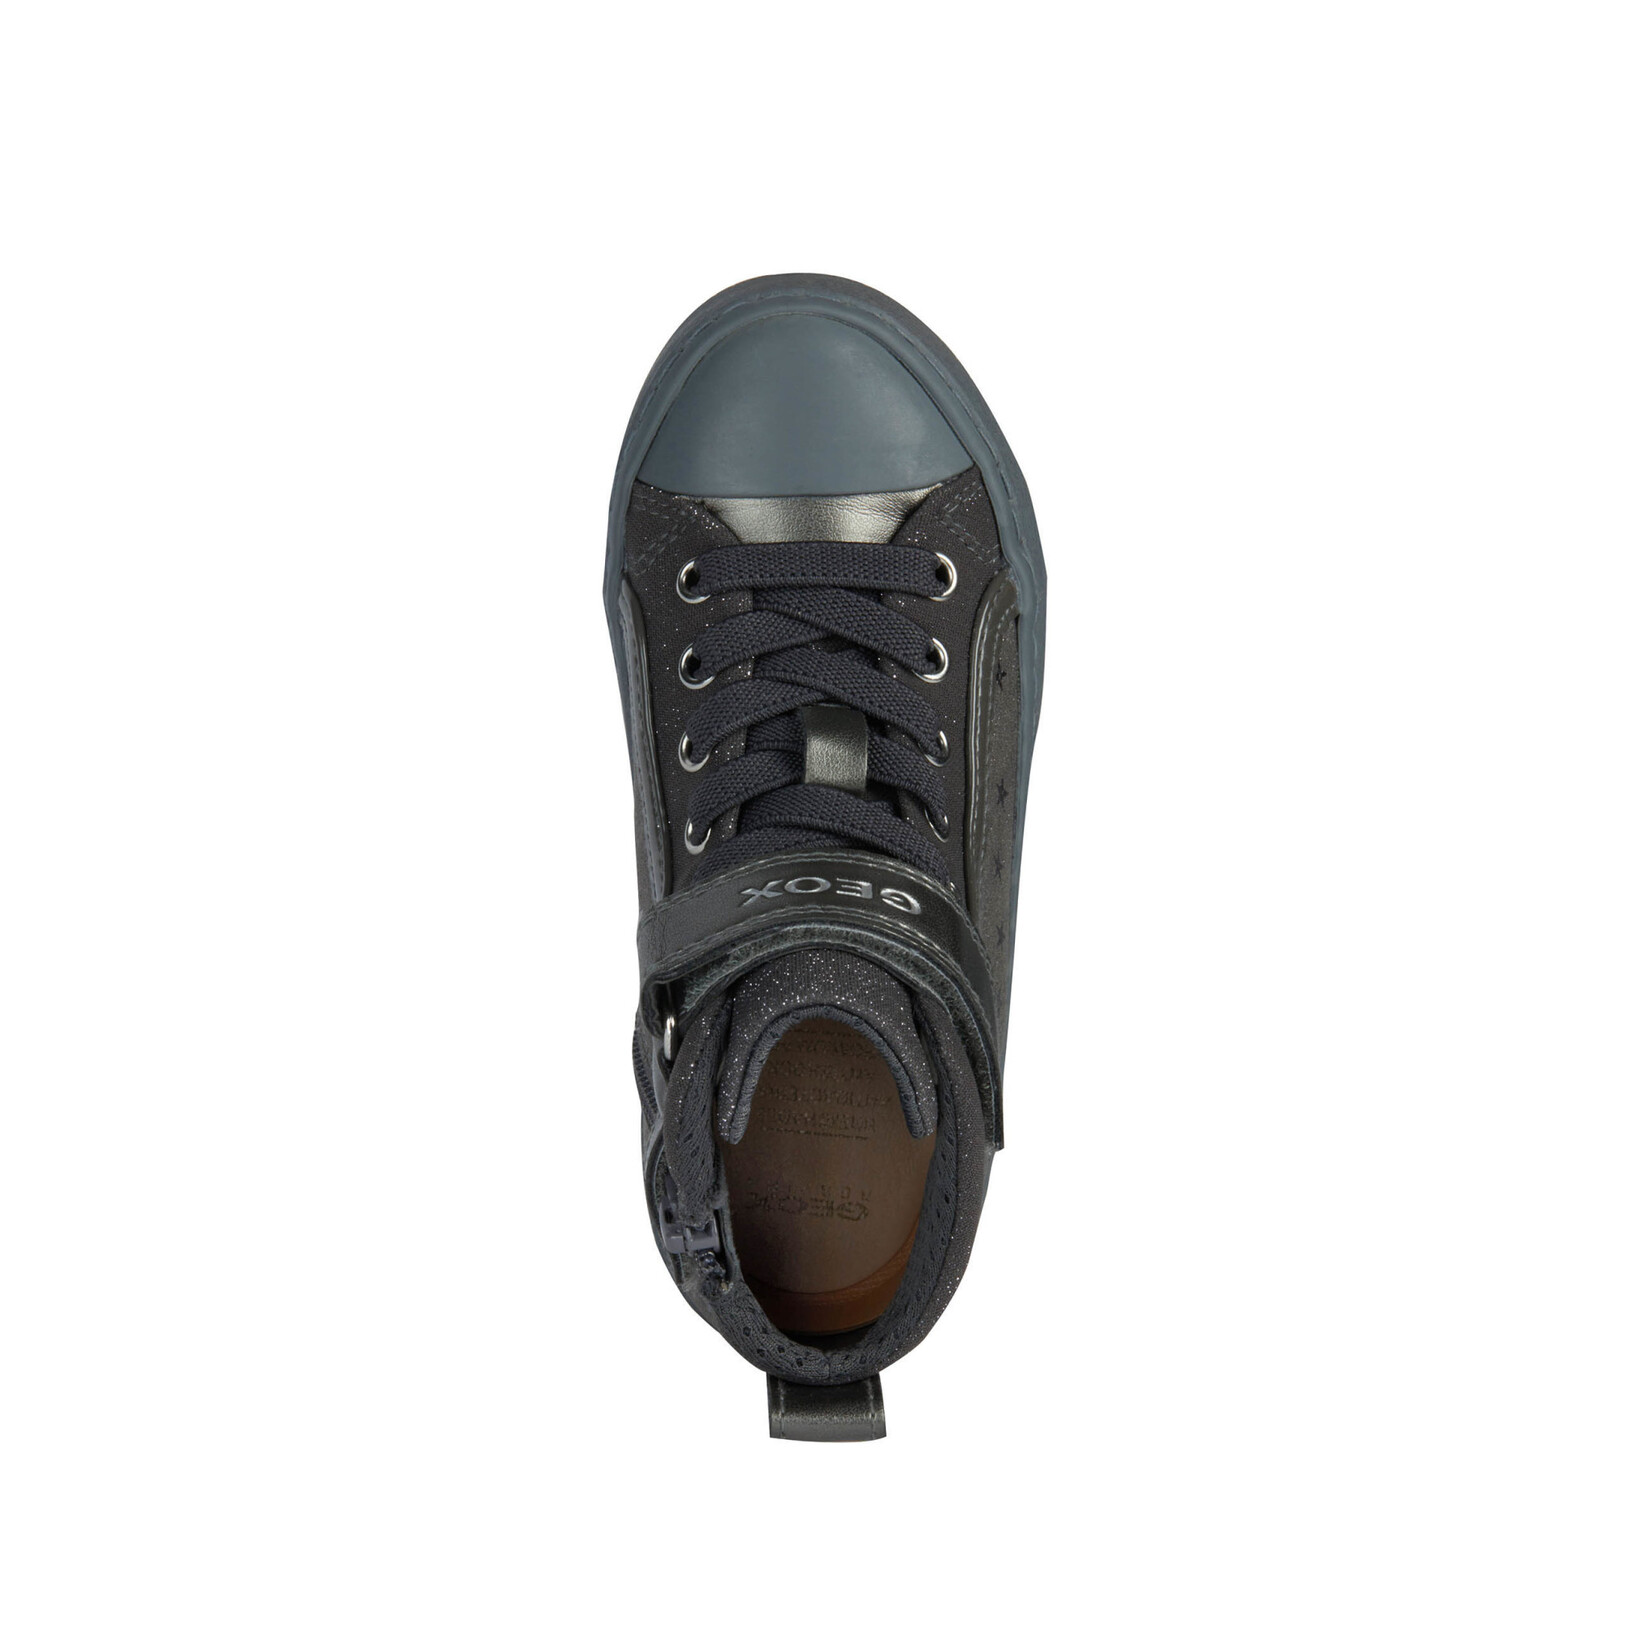 Geox GEOX - High-top Shoes in Glitter Grey with Star Print 'J. Kalispera G. I'